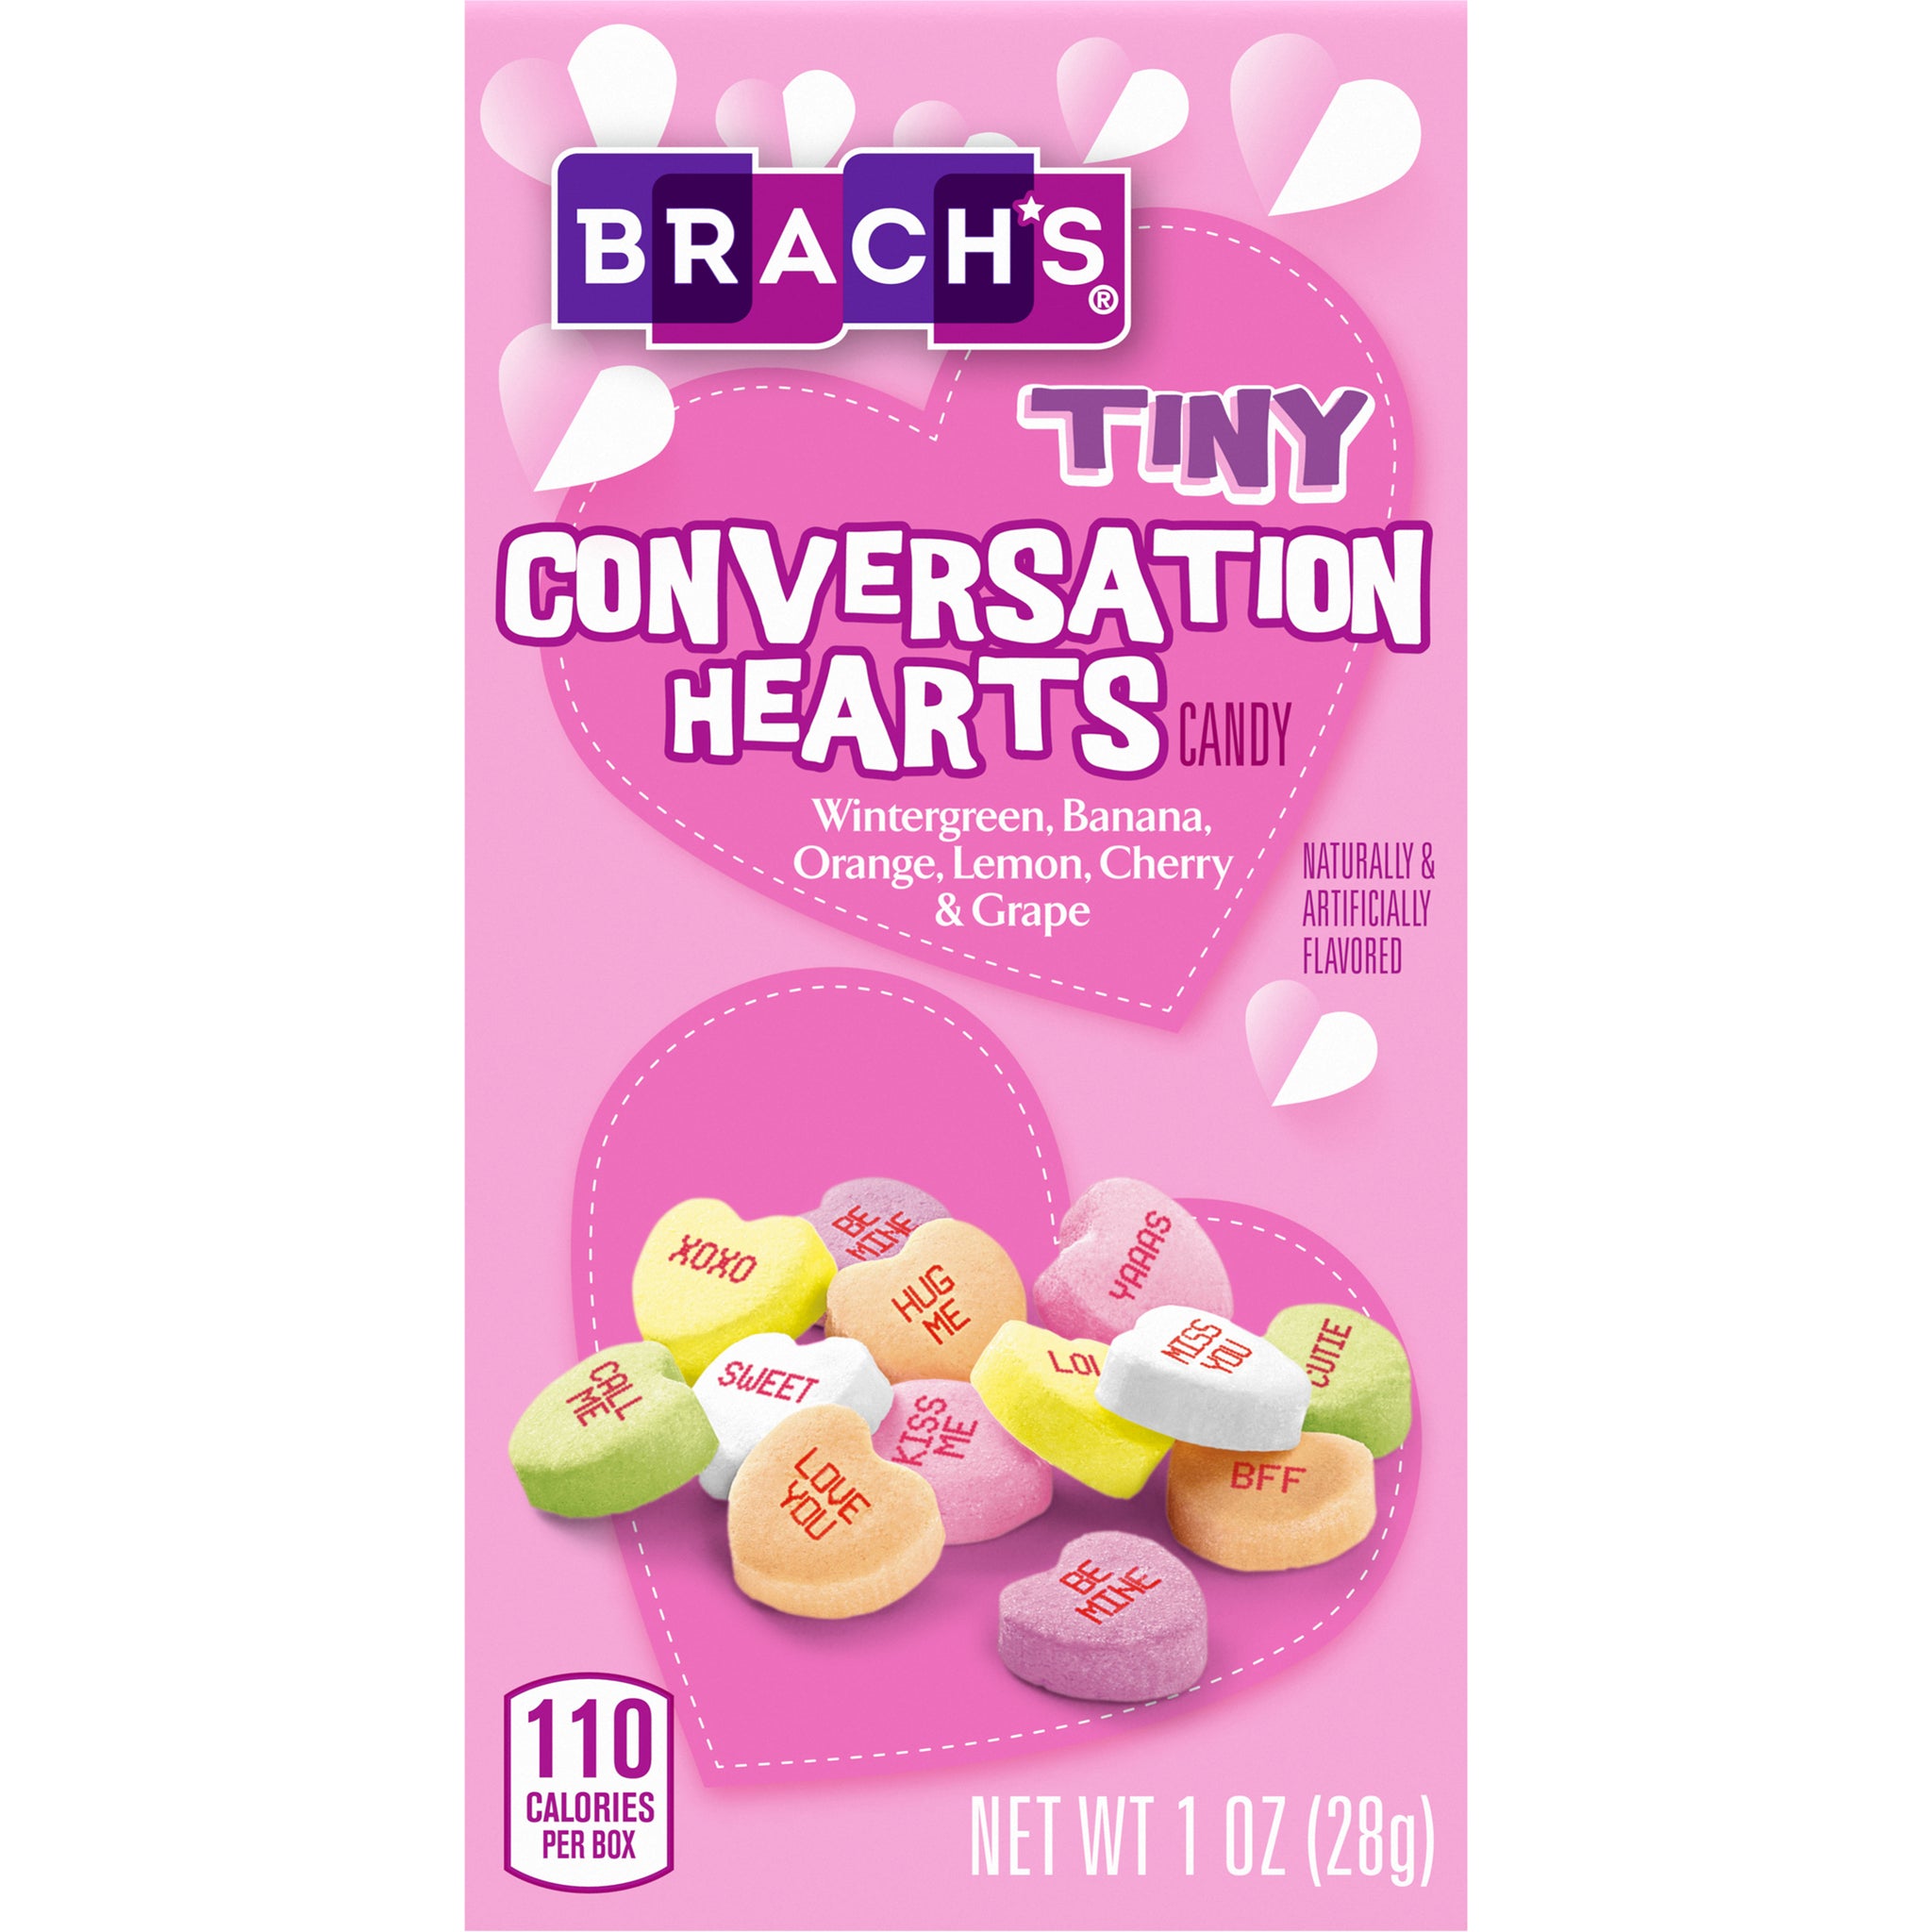 2 Brach's TINY CONVERSATION HEARTS Valentines Day Candy 14 oz